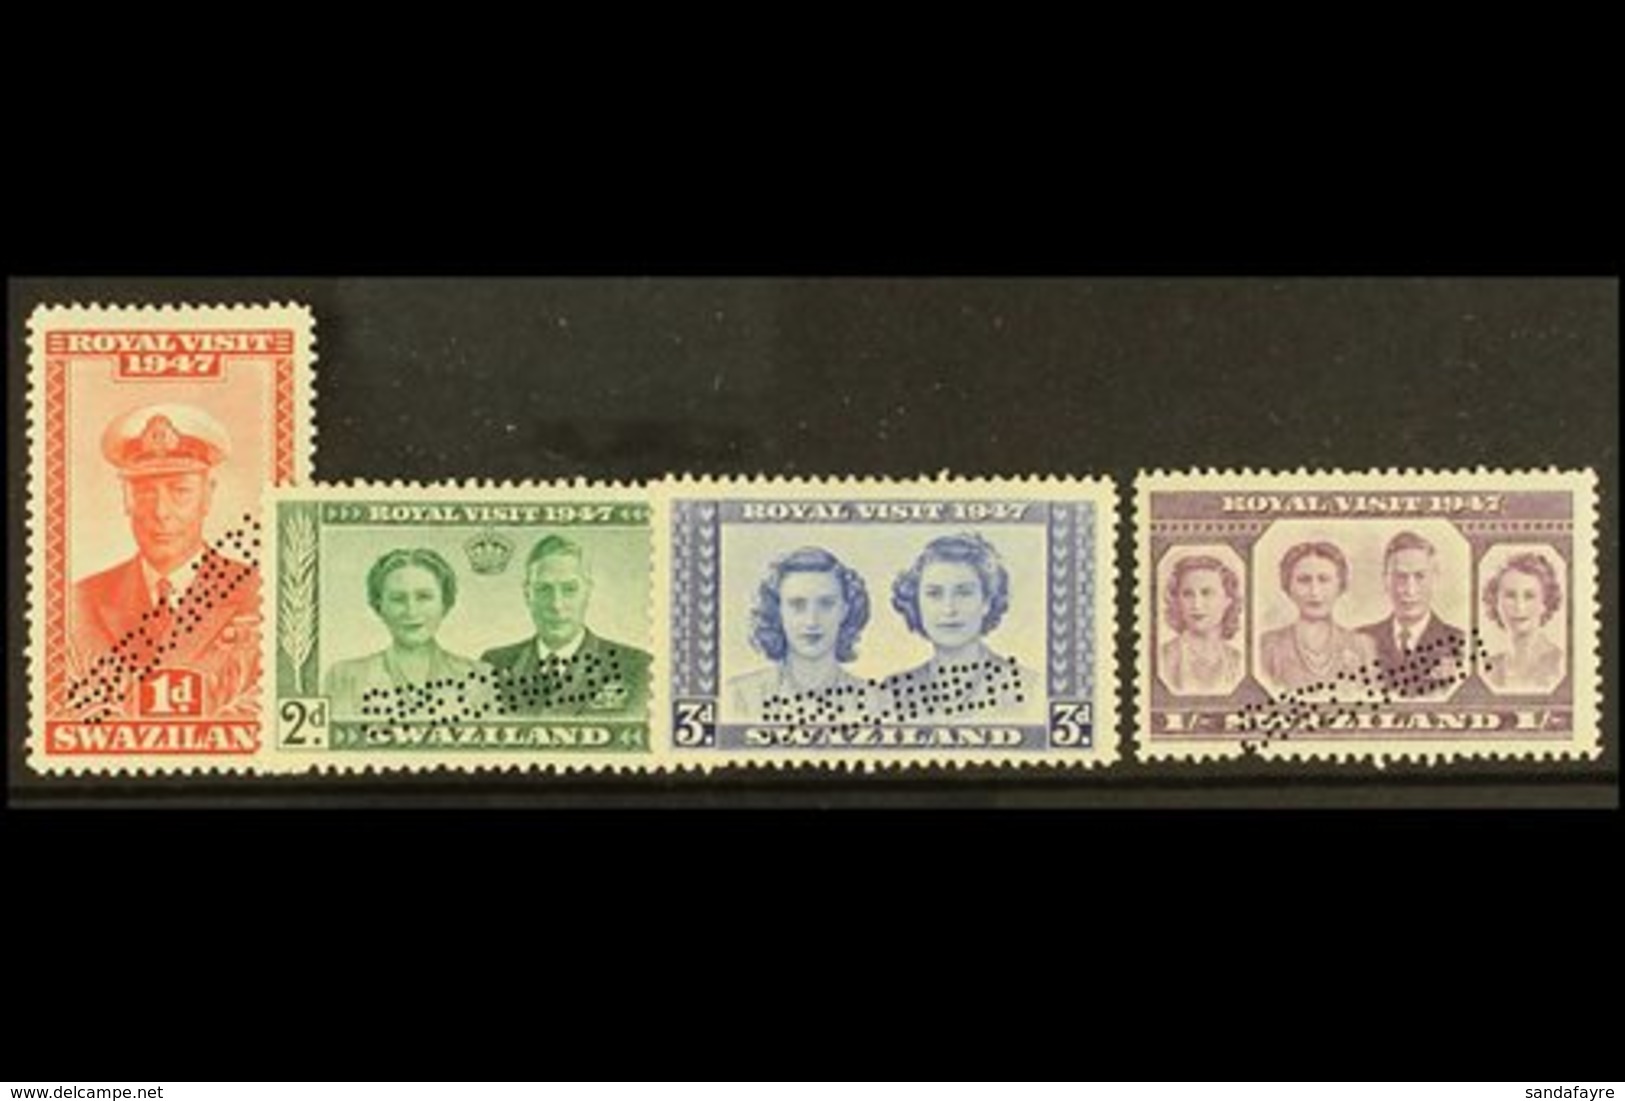 1947  Royal Visit Set Perforated "Specimen", SG 42s/45s, Very Fine Mint, Large Part Og. (4 Stamps) For More Images, Plea - Swasiland (...-1967)